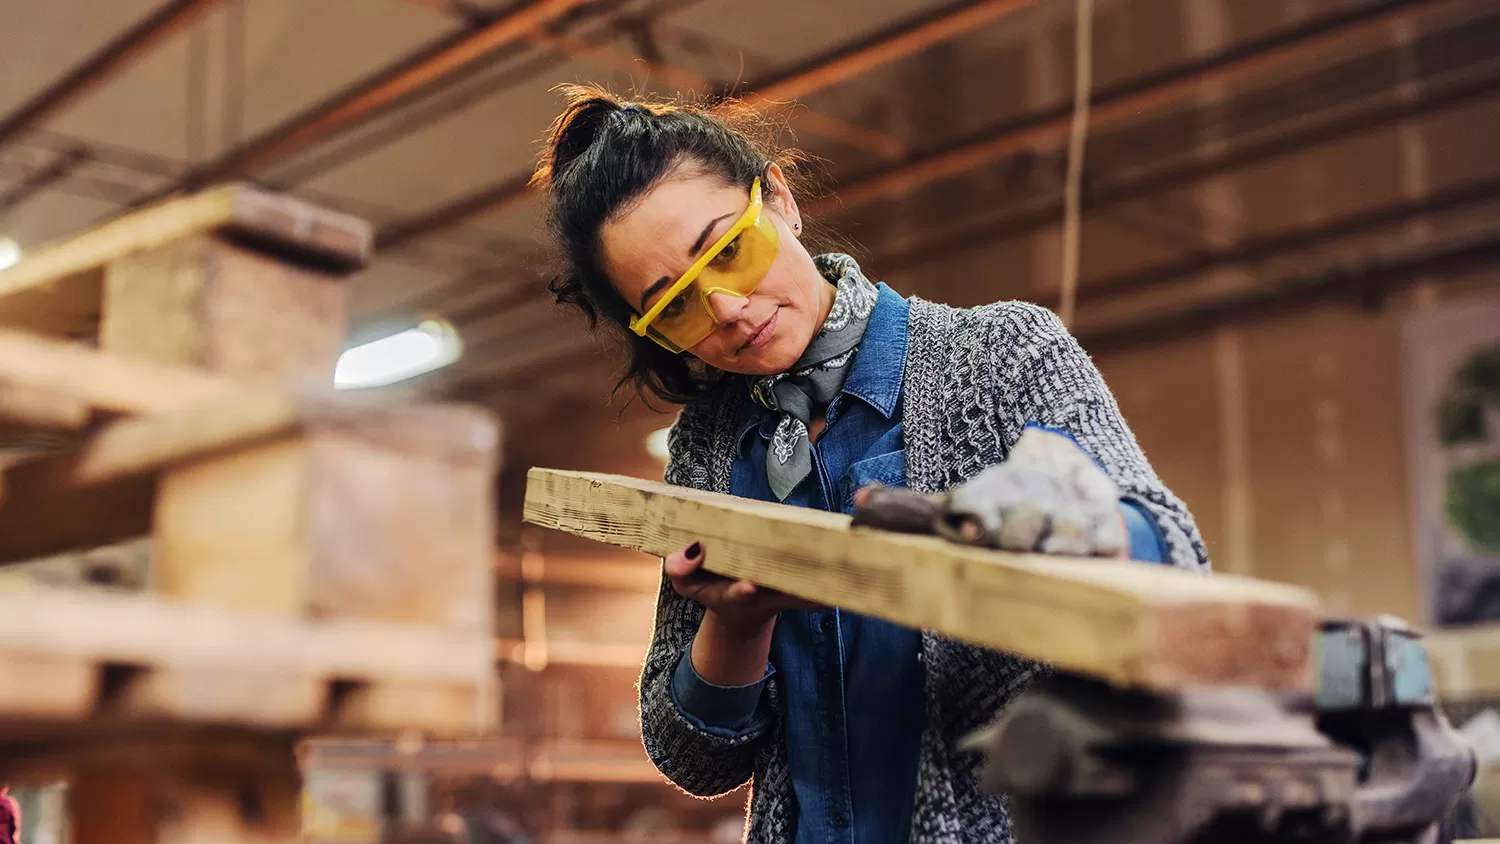 A woman cutting wood in a workshop